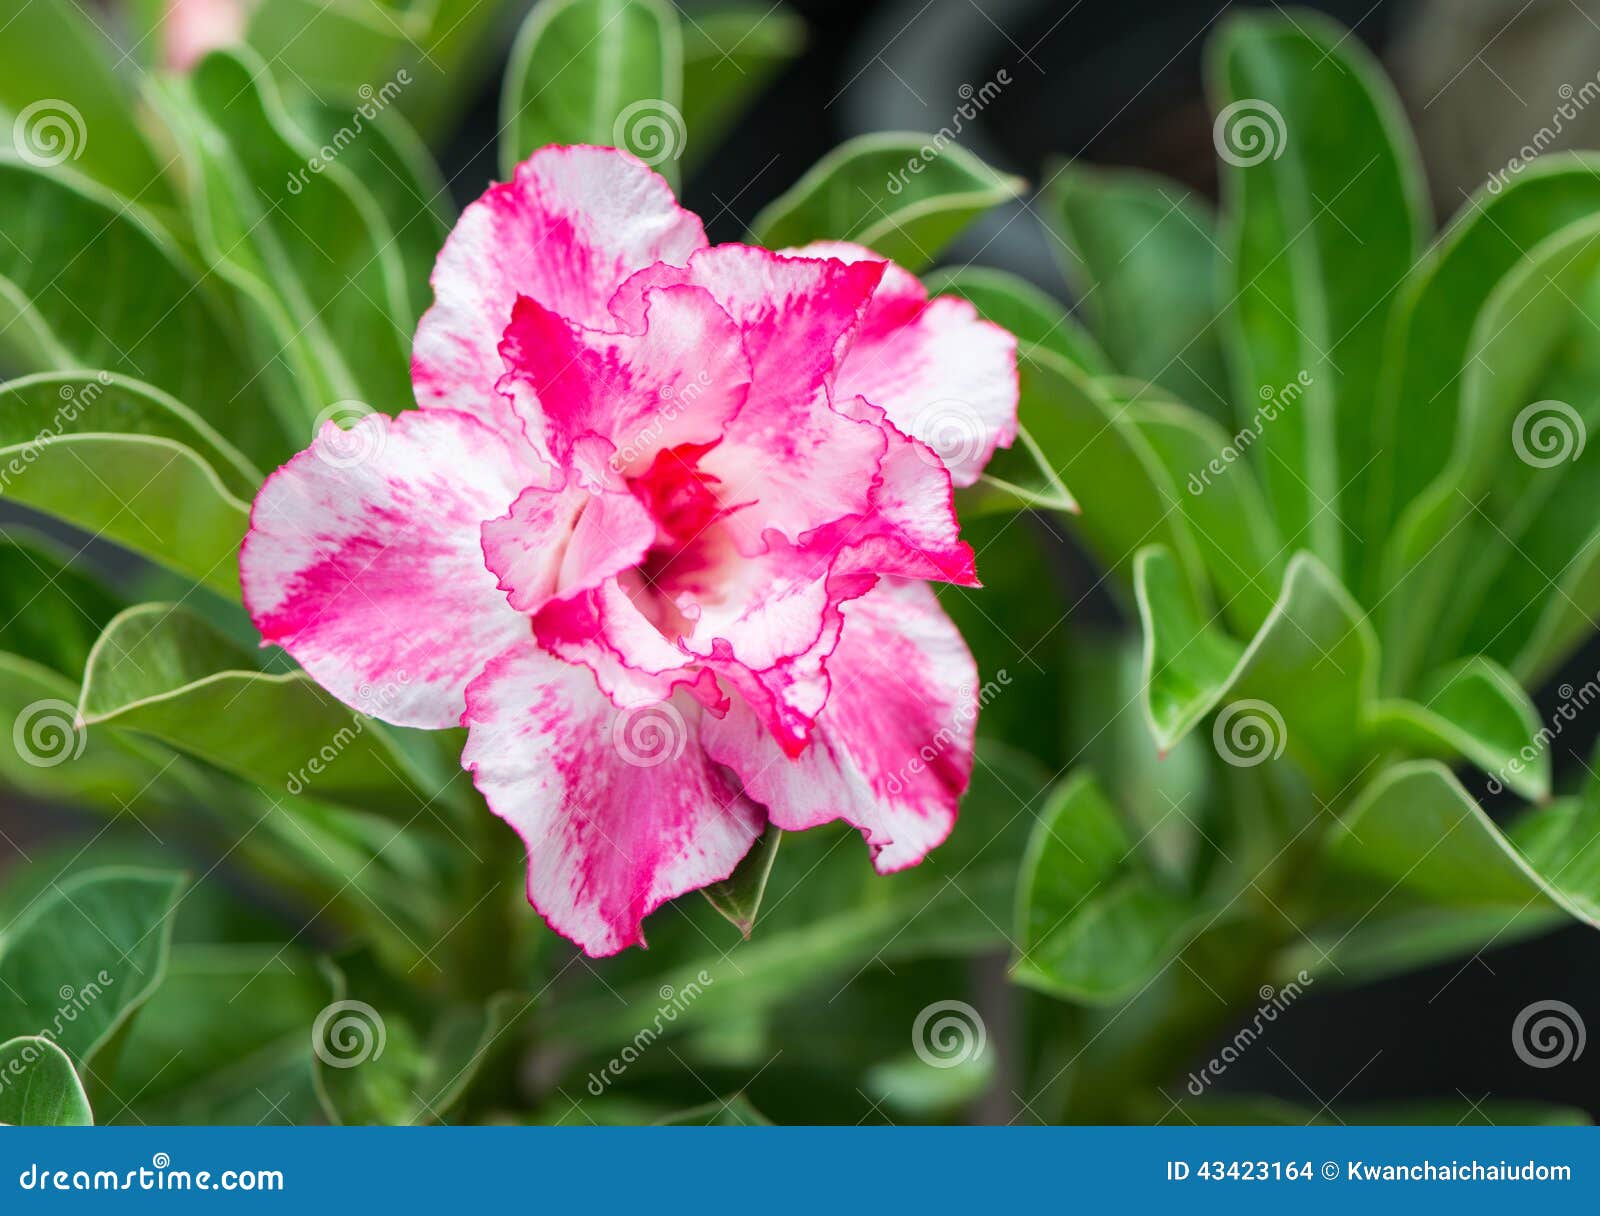 Pink Impala Lily flower stock photo. Image of nature - 43423164